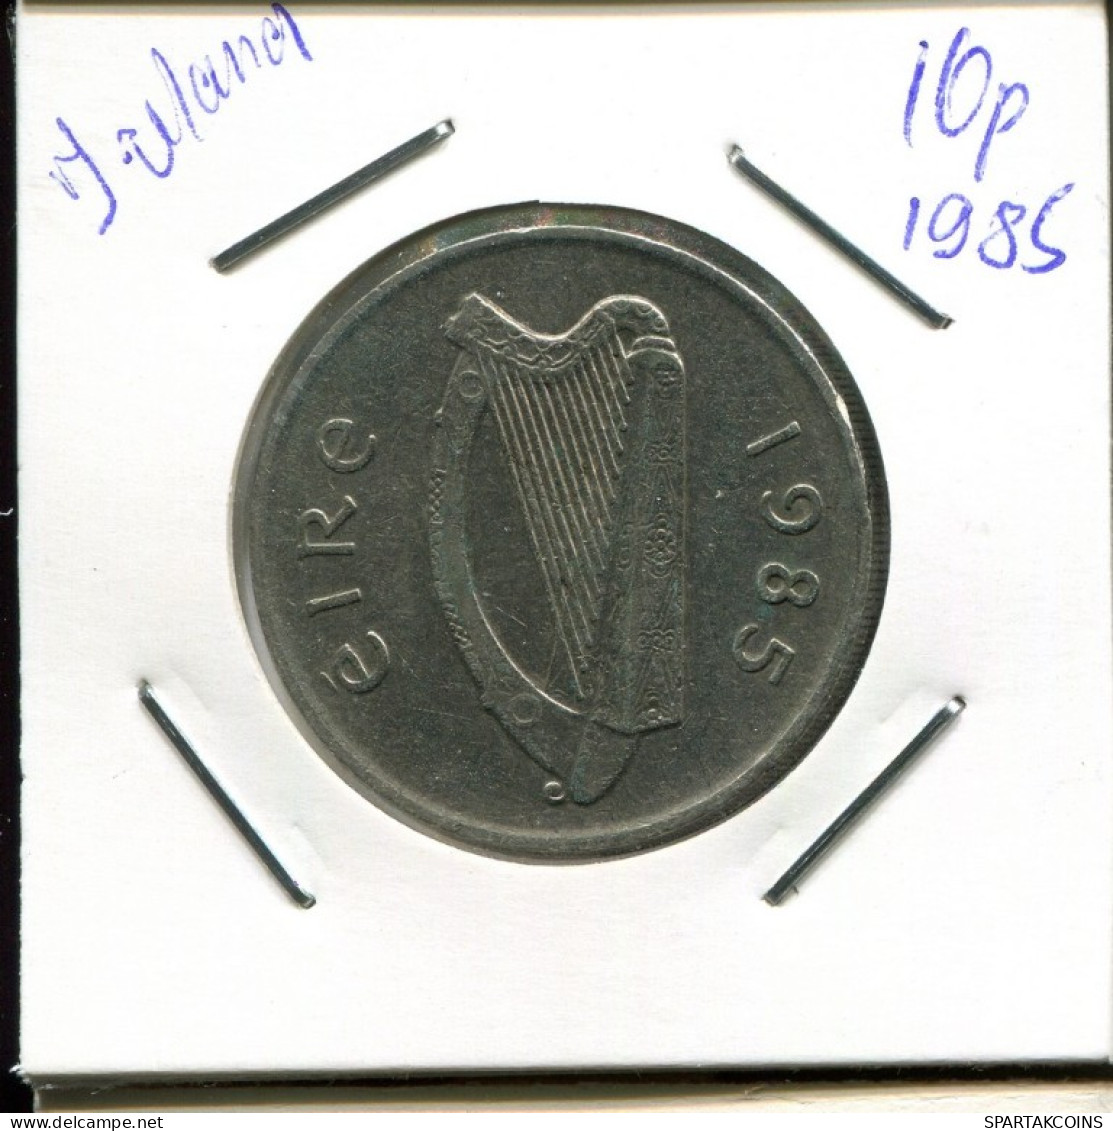 10 PENCE 1985 IRLANDA IRELAND Moneda #AN610.E.A - Ireland